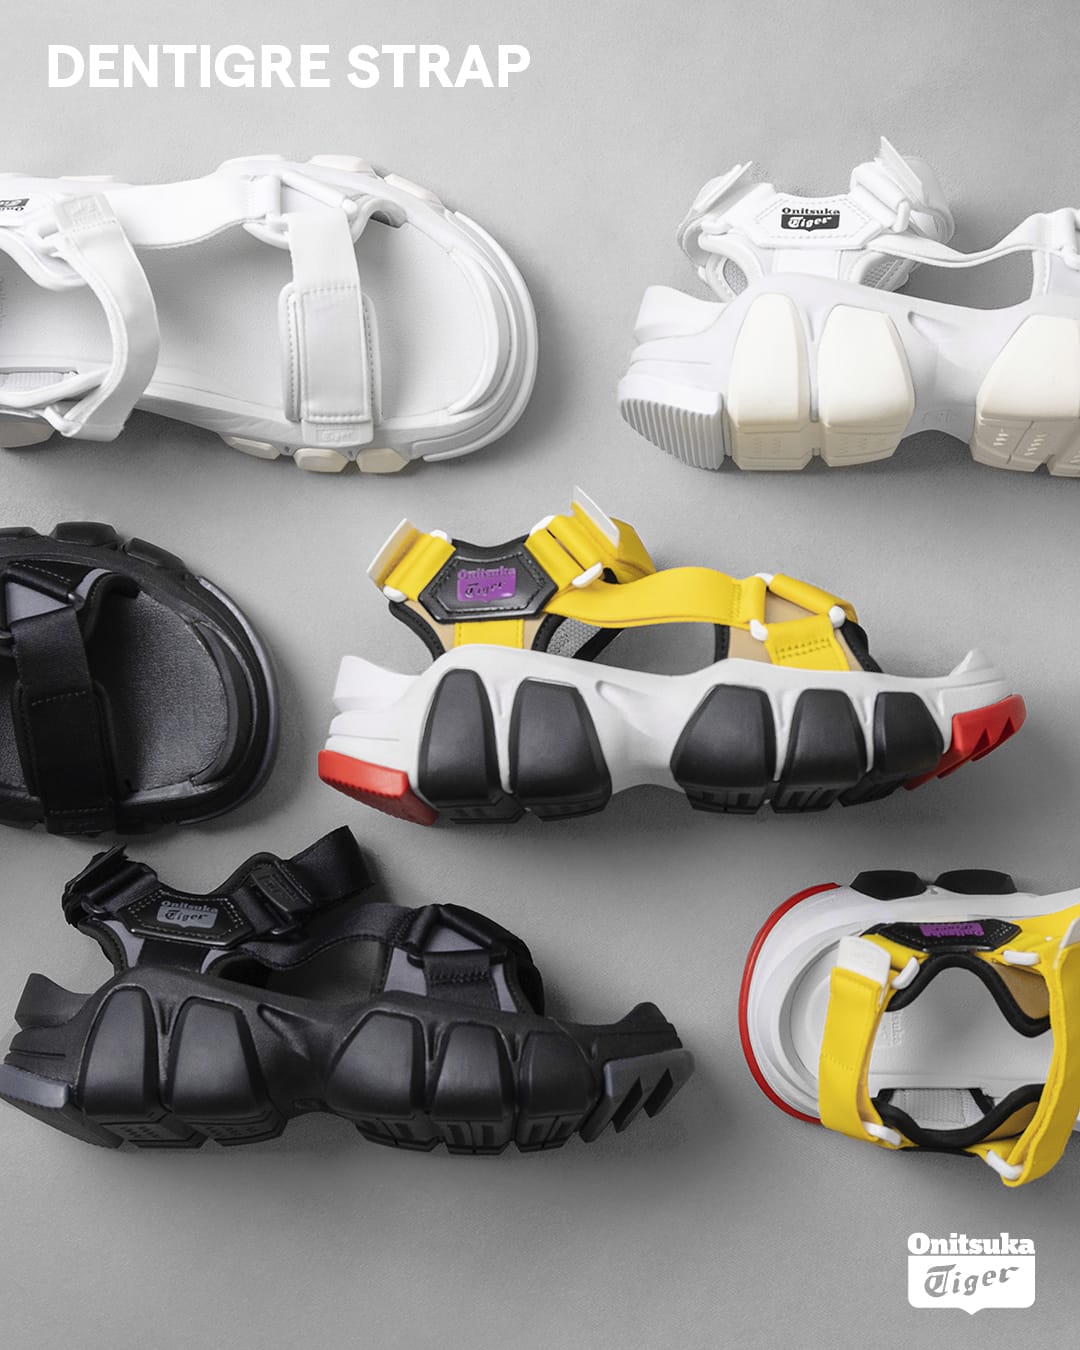 Onitsuka Tiger's Range Of Sandals Are Set To Dominate - Men's Folio